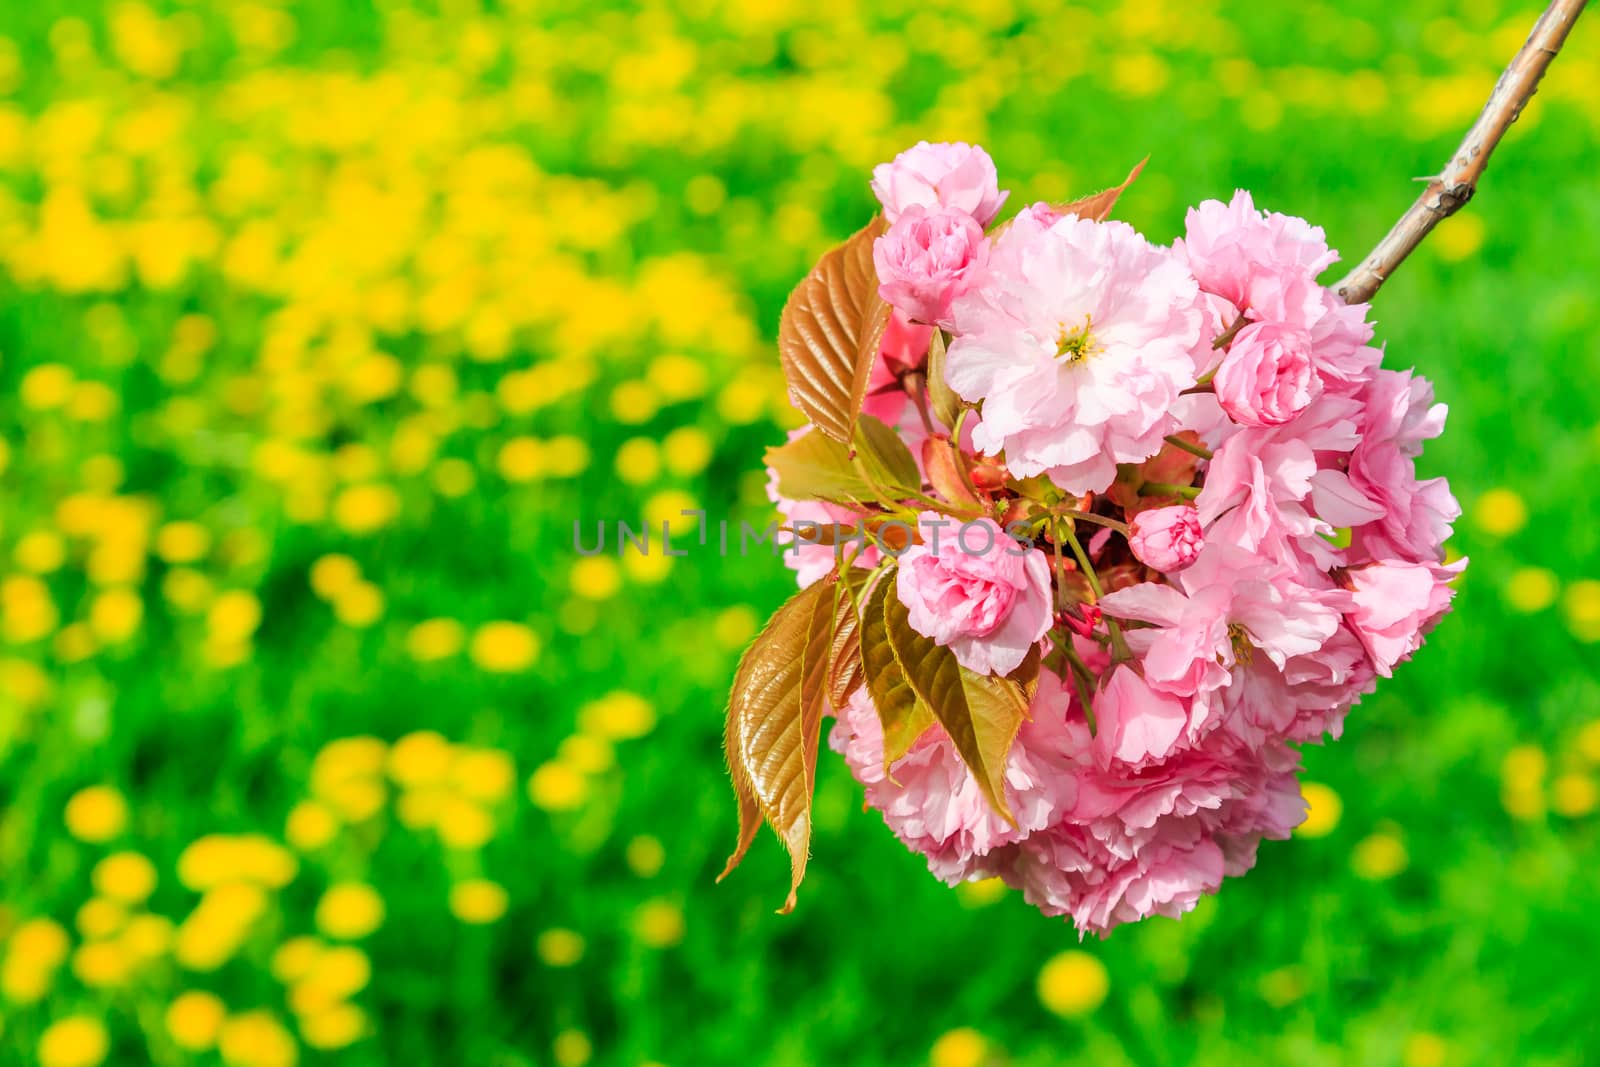 bud Sakura flowers on blurred background of green grass and yellow dandelions